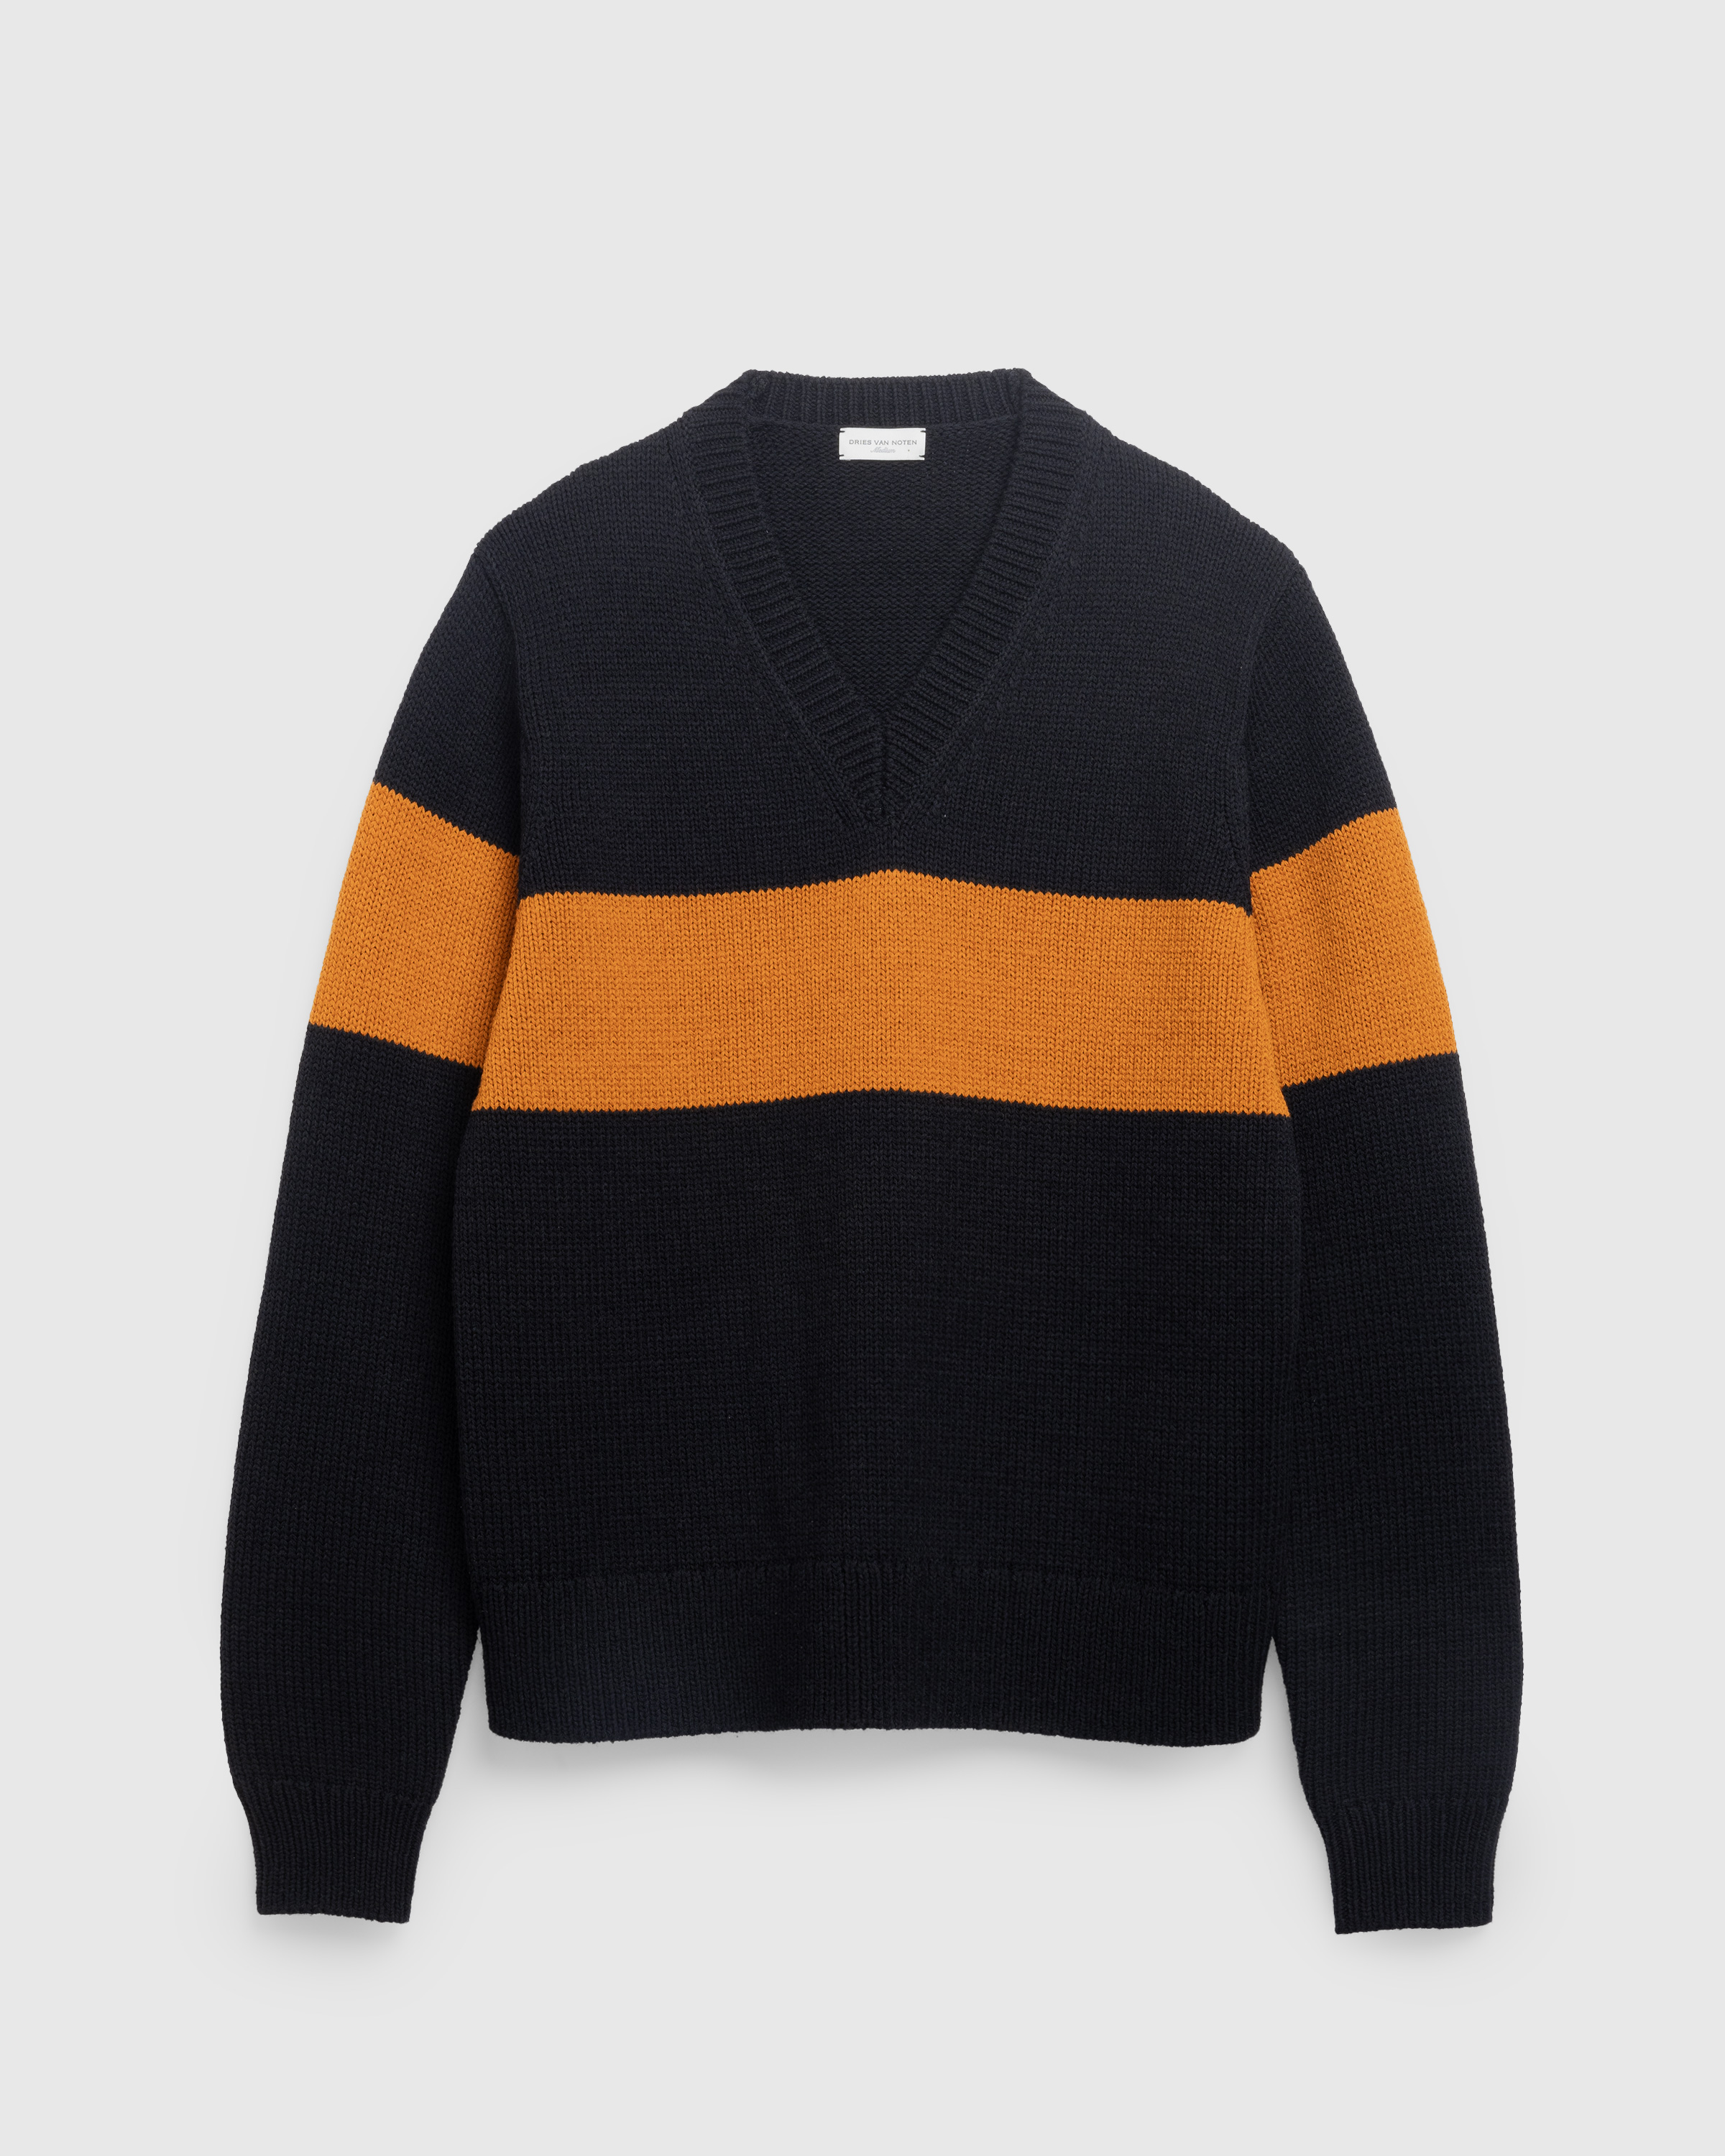 Dries van Noten – Manus Sweater Black - Knitwear - Multi - Image 1